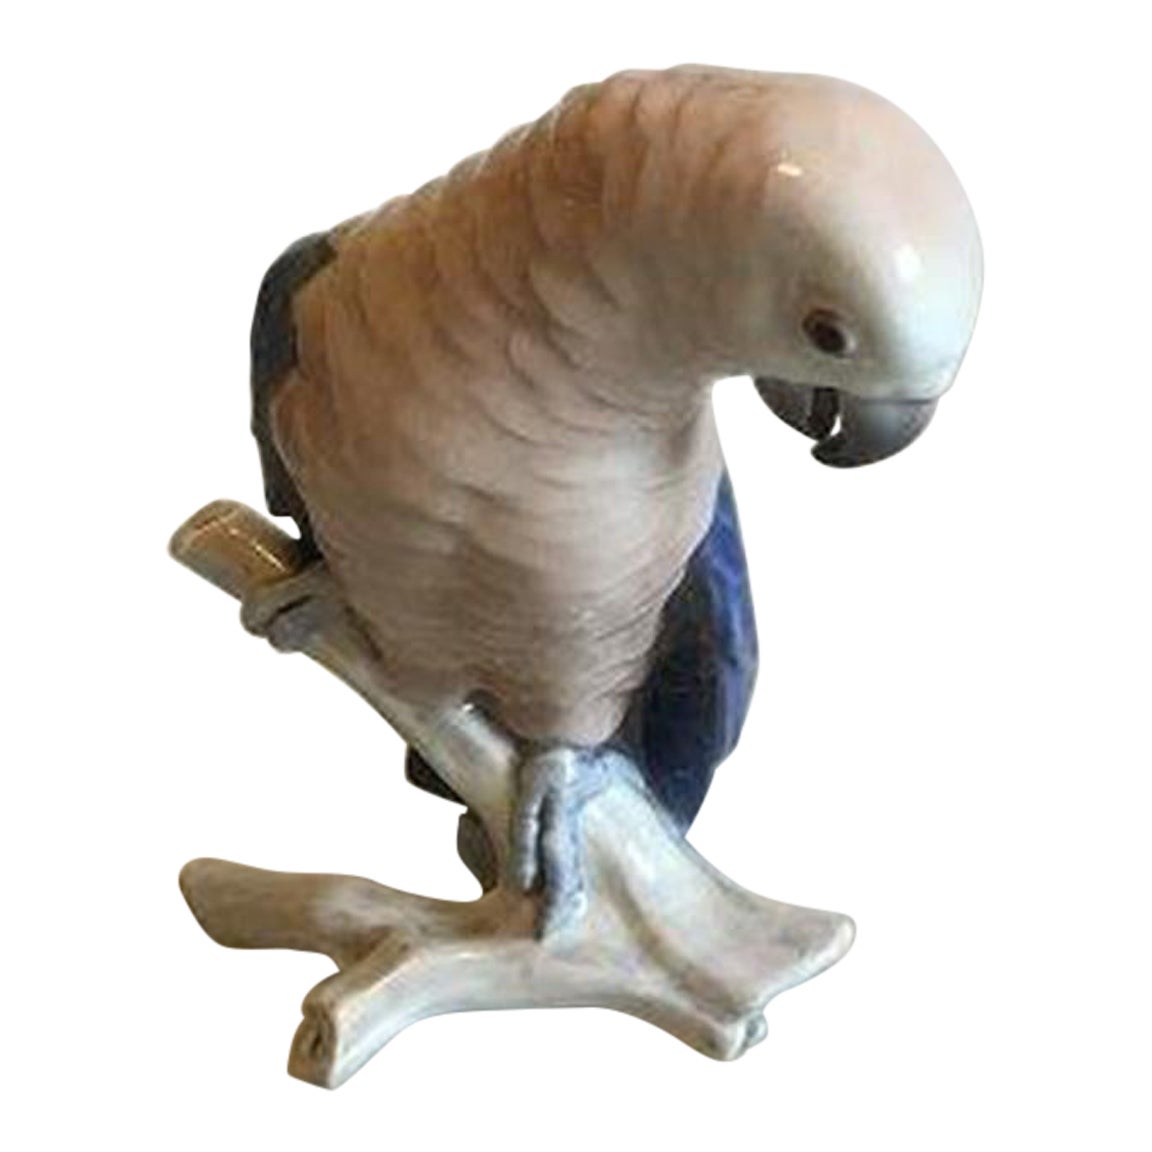 Bing & Grondahl Figurine of Parrot No 2019